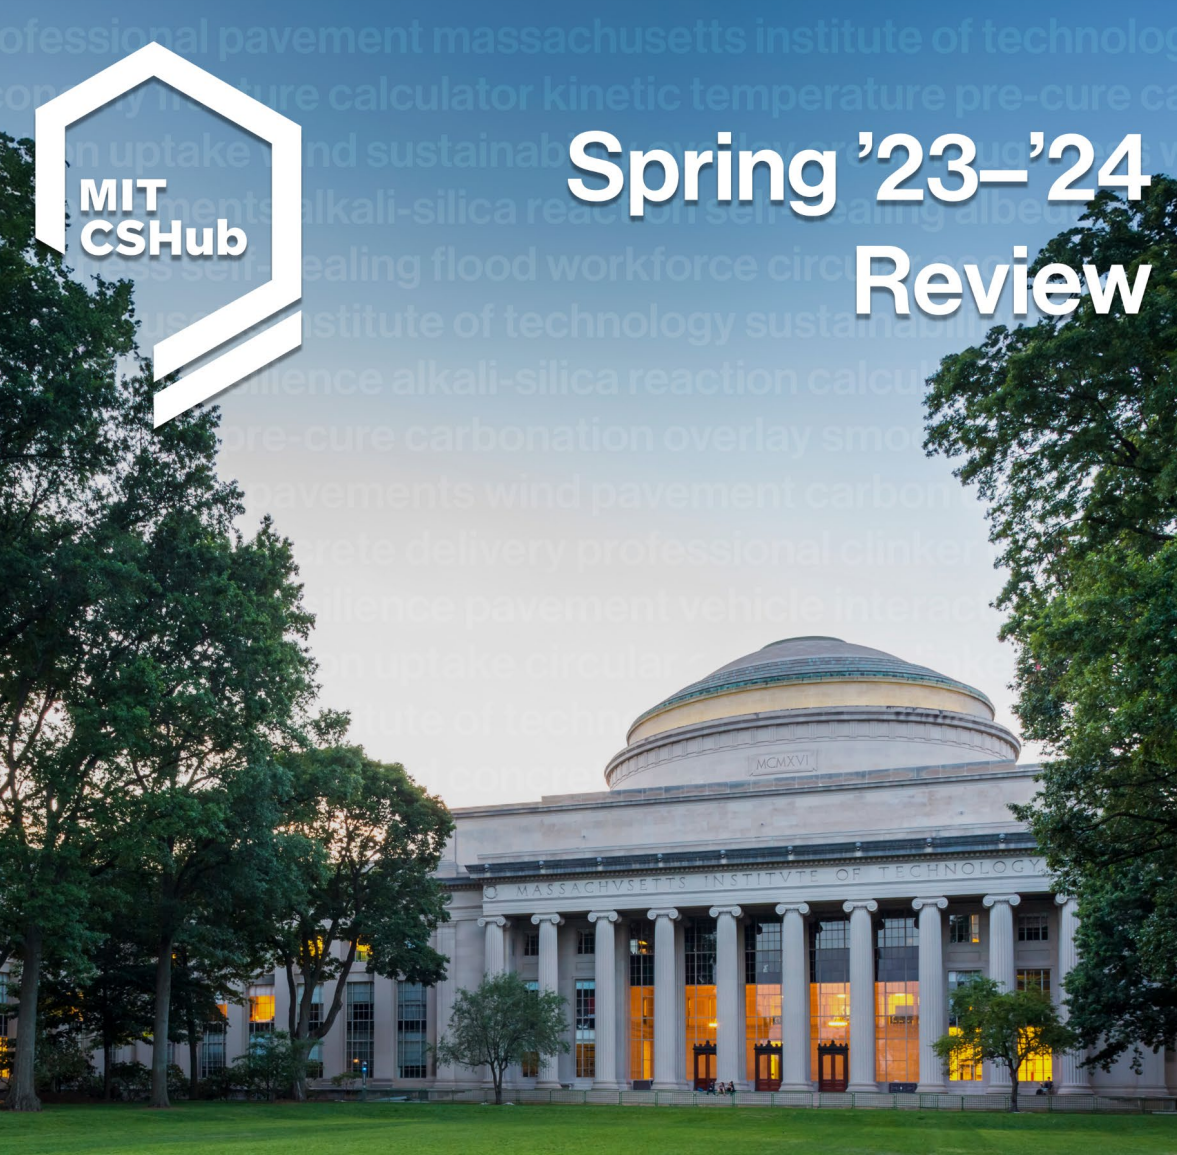 MIT CSHub Spring ’23-’24 Review